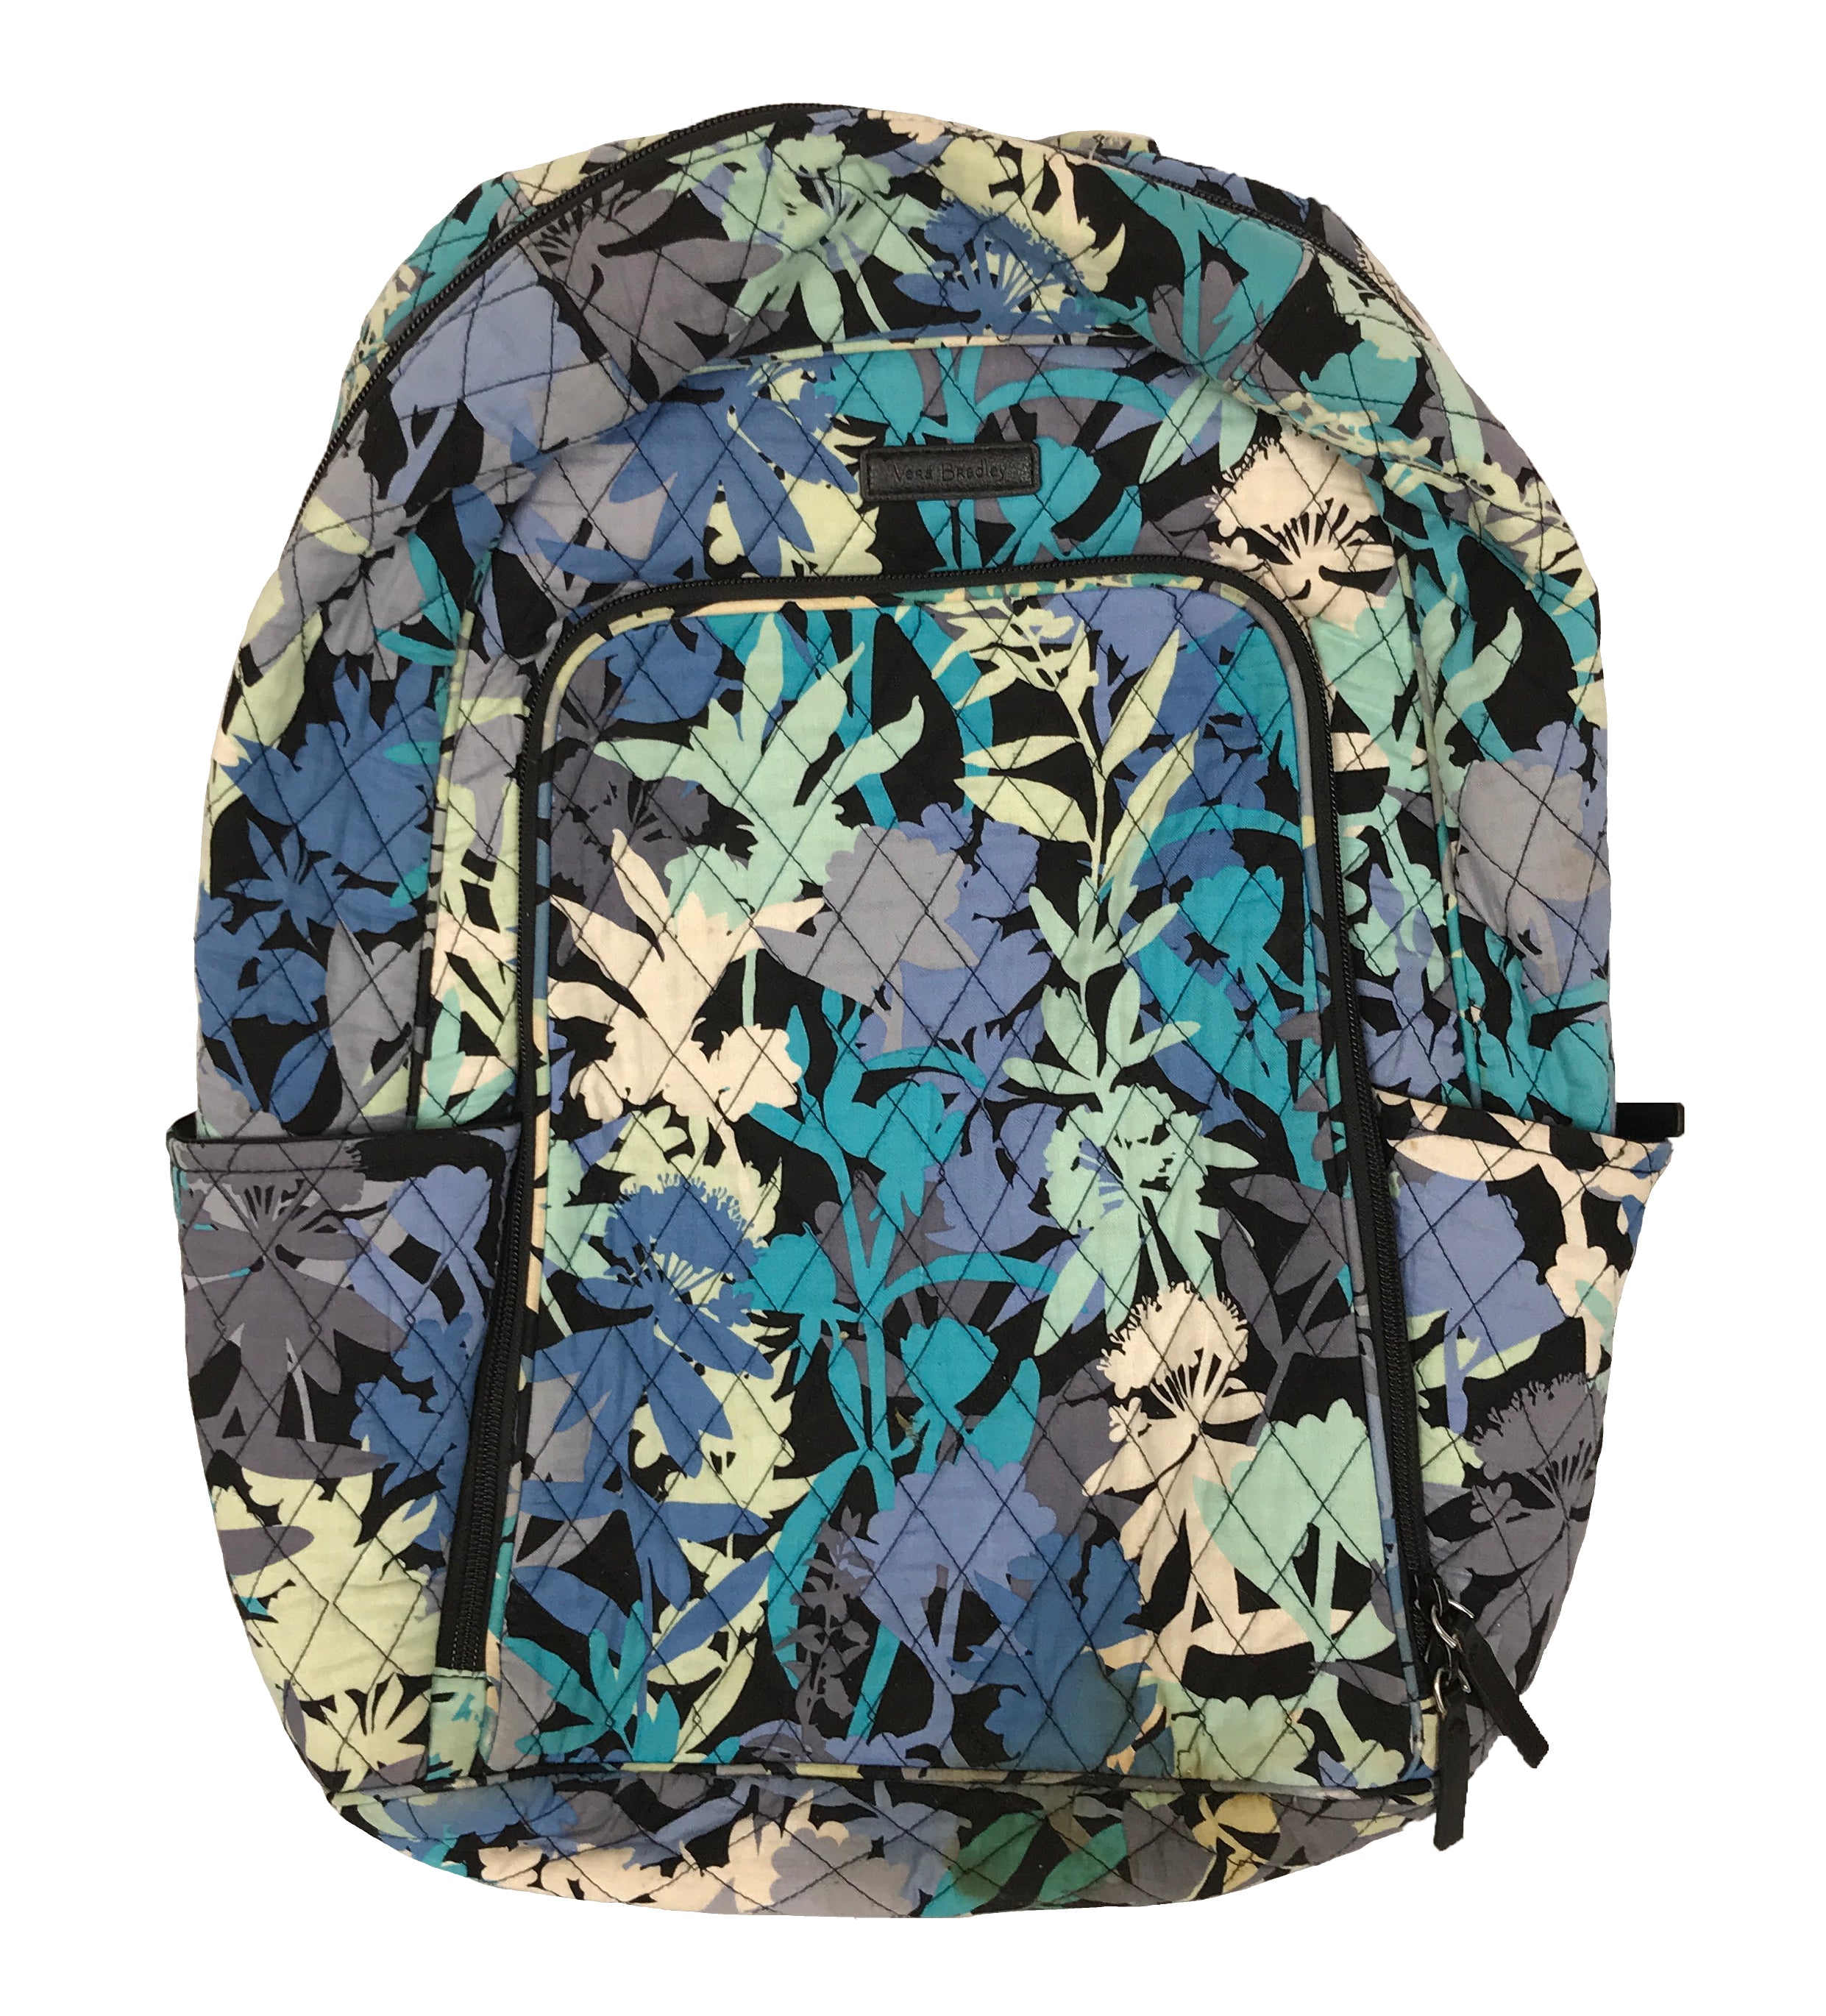 Vera Bradley "Camofloral" Pattern Backpack